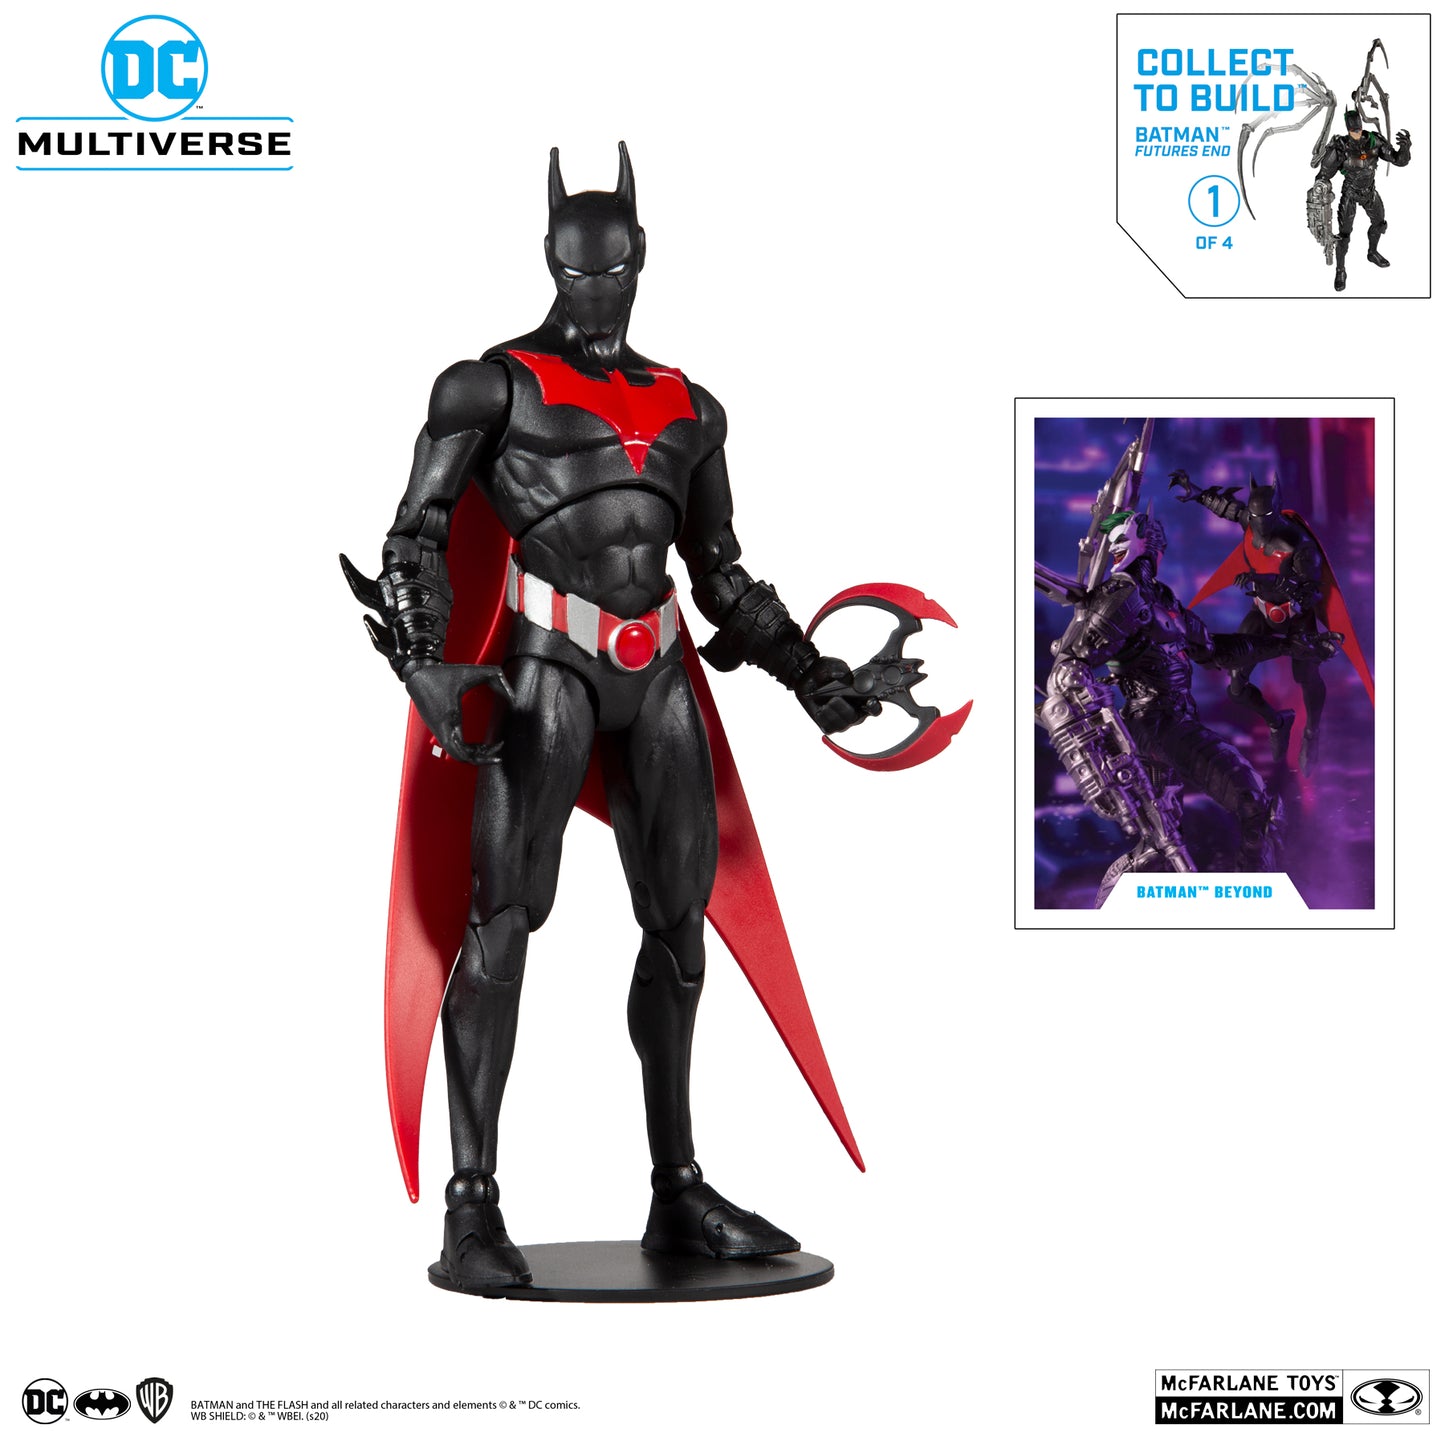 McFarlane Toys DC Multiverse Batman Beyond Batman [Jokerbot BAF Included]